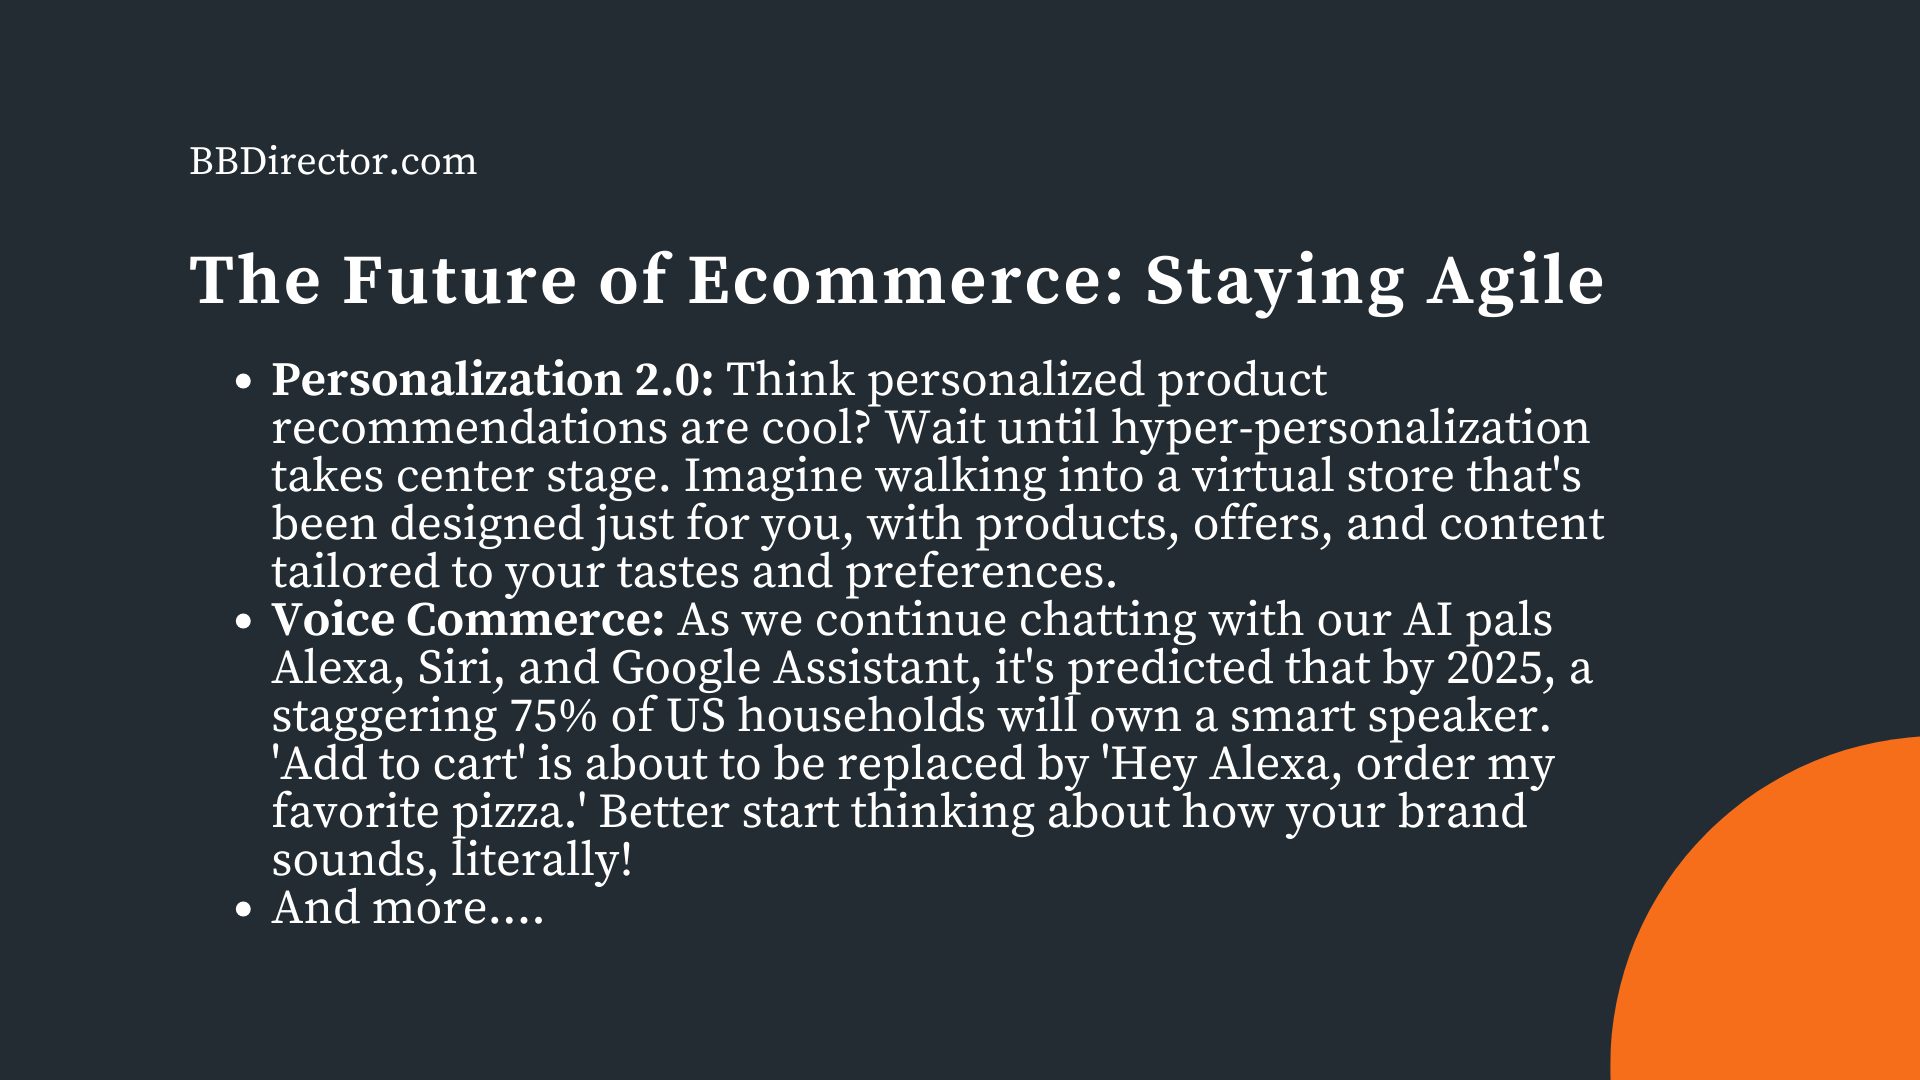 future of ecommerce